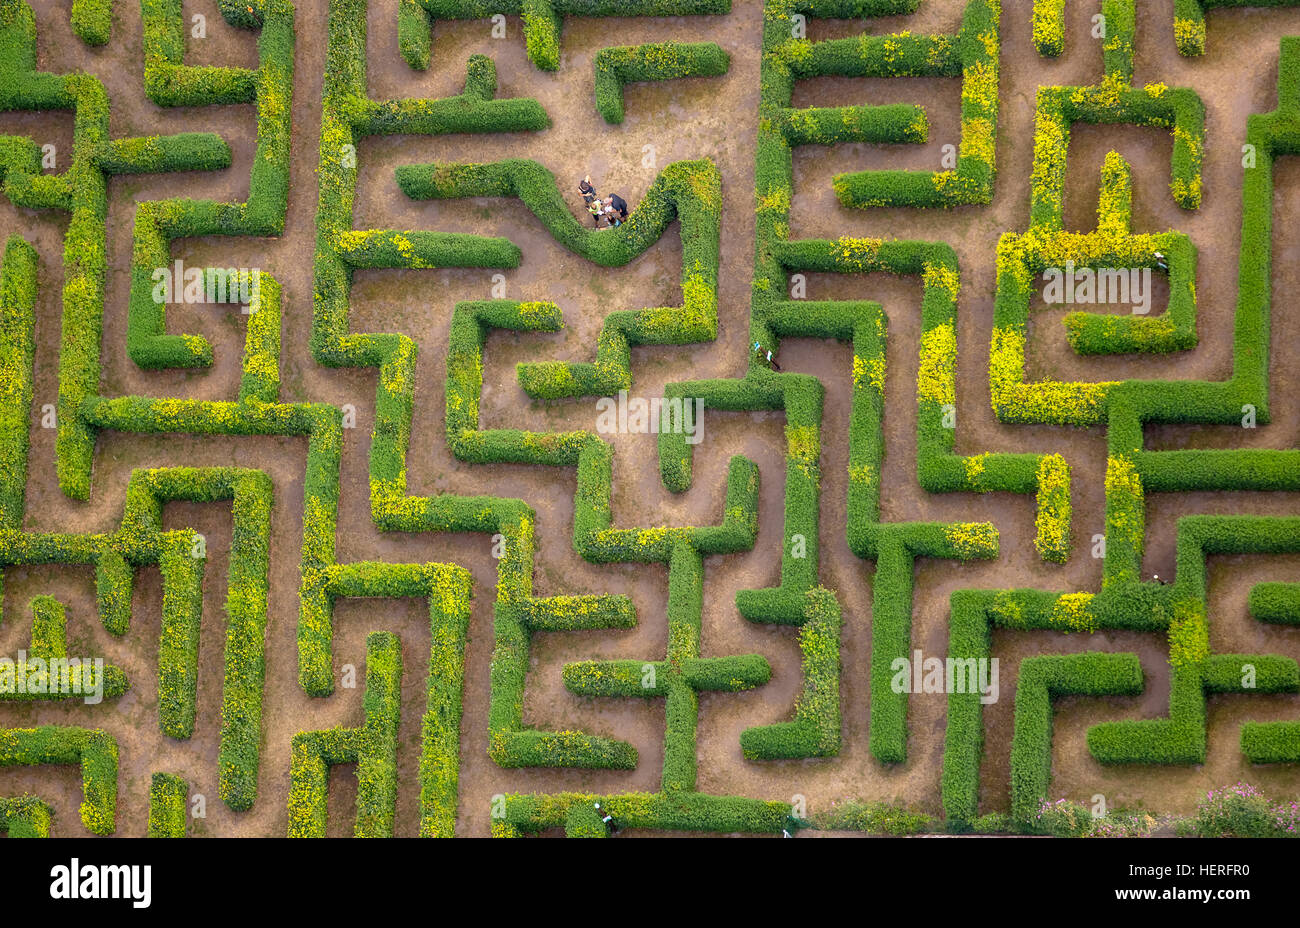 Vista aerea, labirinto di siepi, labirinto, Bollewick, Meclemburgo-Pomerania, Germania Foto Stock